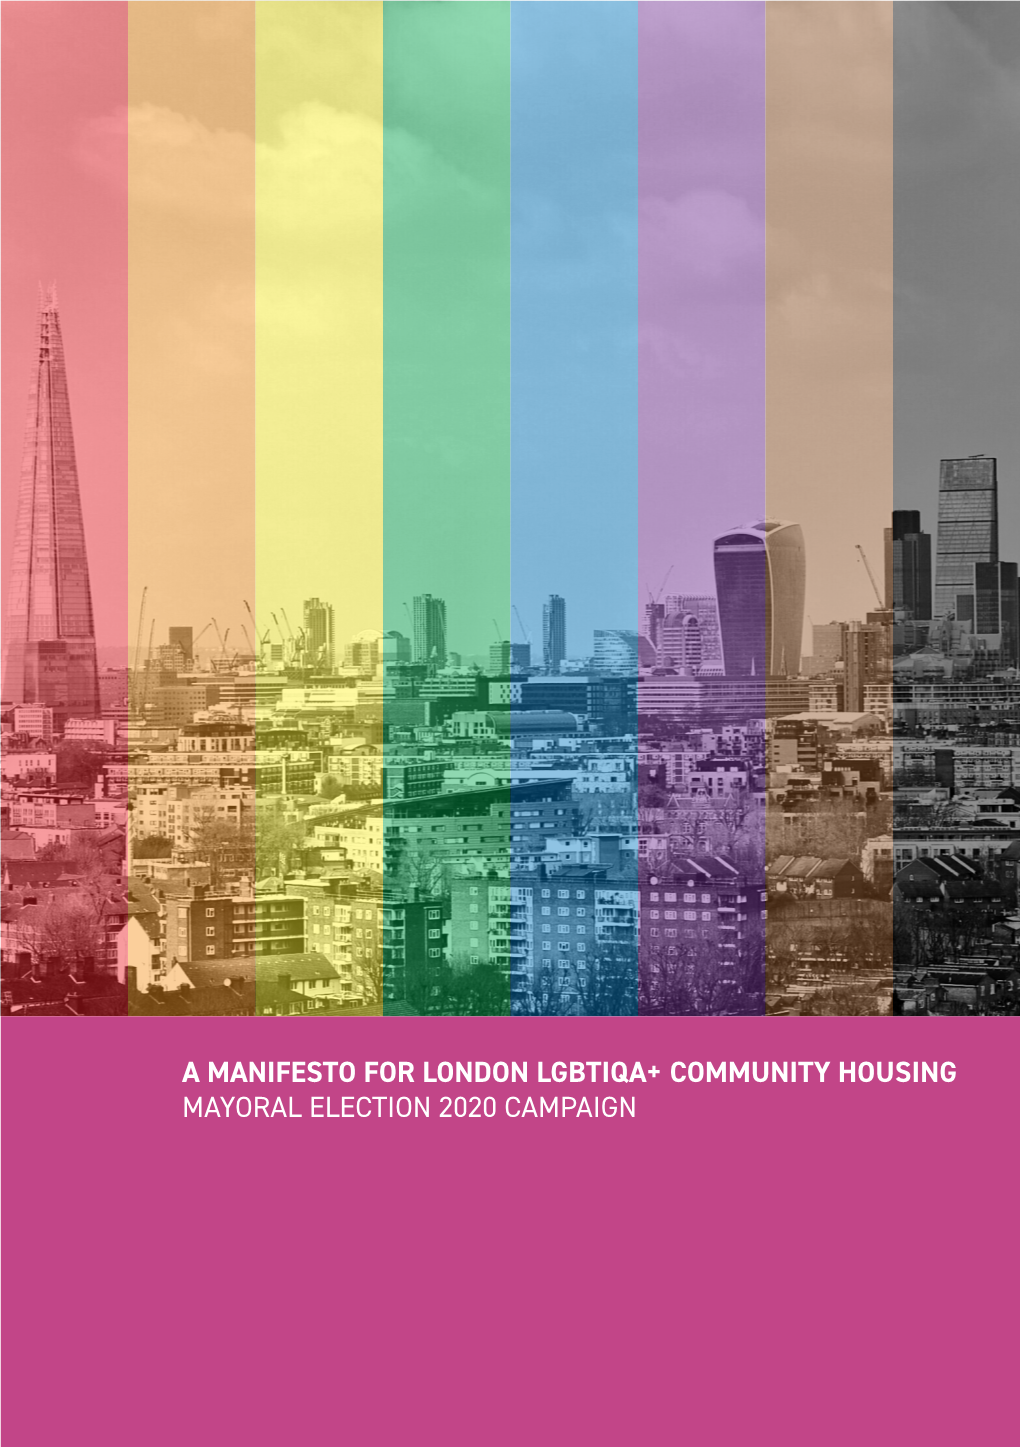 A Manifesto for London Lgbtiqa+ Community Housing Mayoral Election 2020 Campaign a Manifesto for London Lgbtiqa+ Community Housing Mayoral Election 2020 Campaign